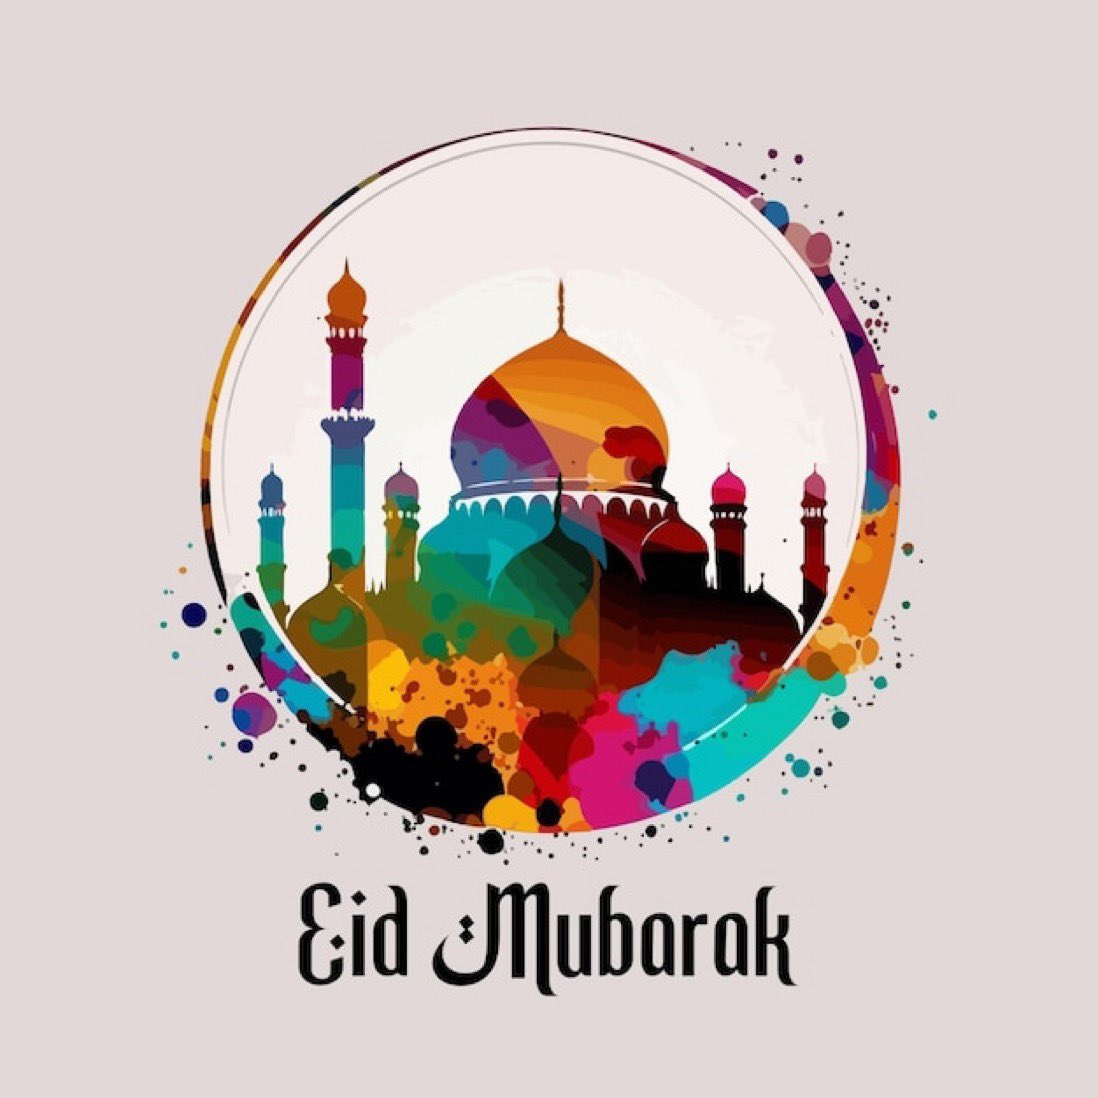 Wishing everyone who celebrates eid, an Eid Mubarak from us at @rcpsych digital sig @DrIainGrant @Nye_Ndebele @LJ_Ali1 @Asifmbachlani @DrRomyGad #digitalsig @moghraby @DrShahidLatif @docsad1